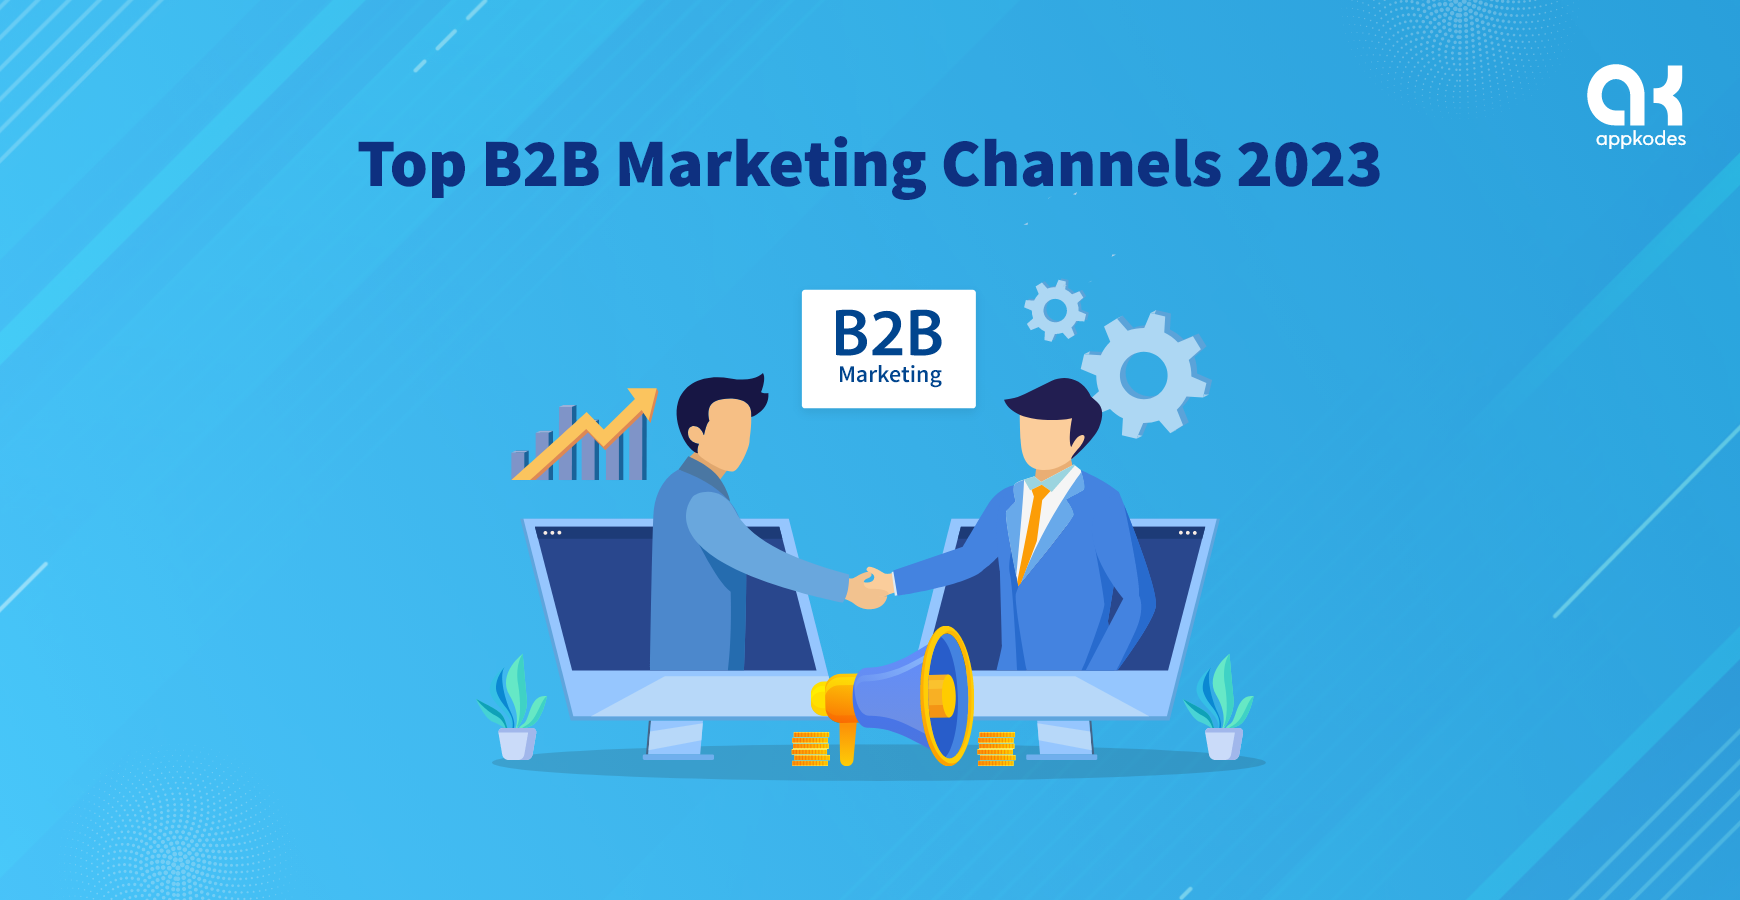 B2B marketing channels